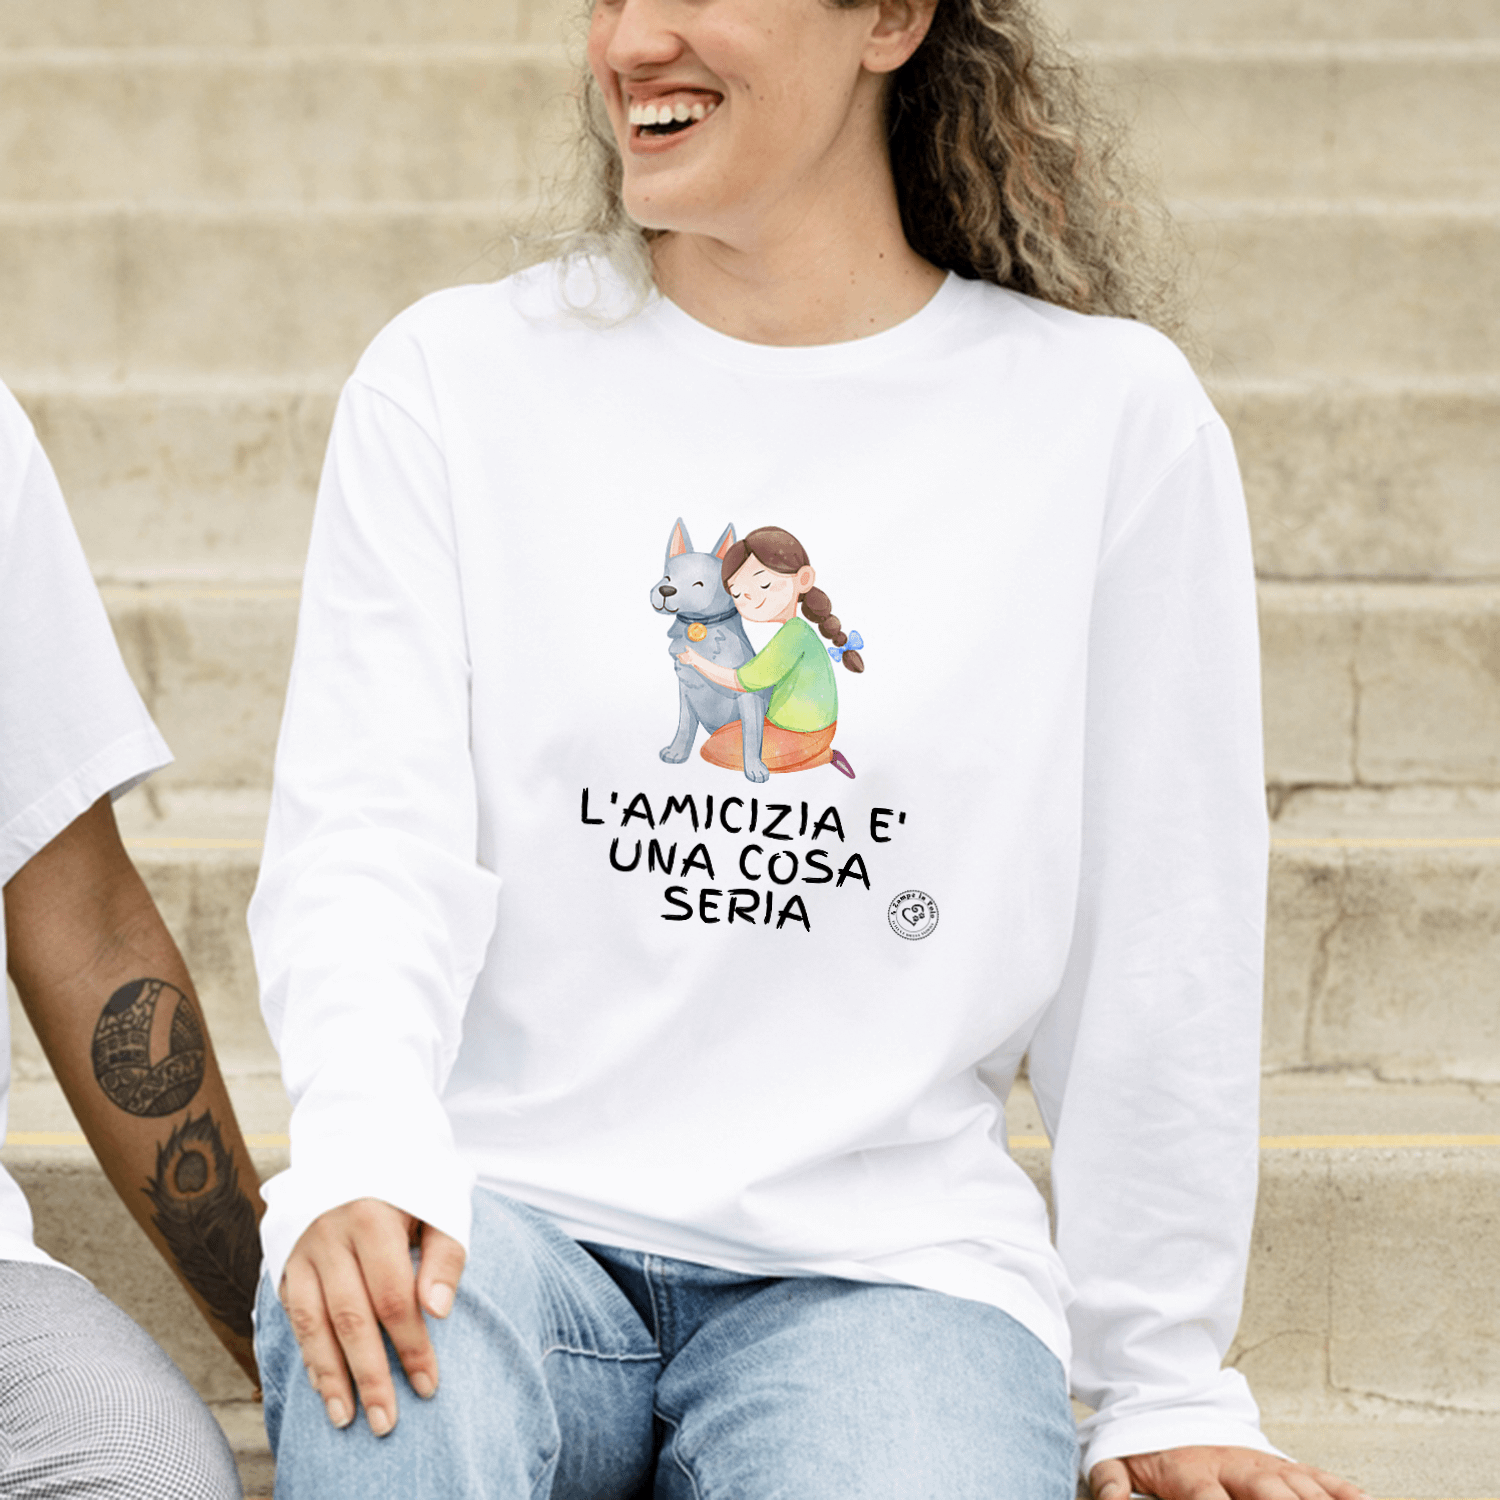 T-Shirt Manica Lunga Solidale "L'Amicizia è una cosa seria" grafica Nera